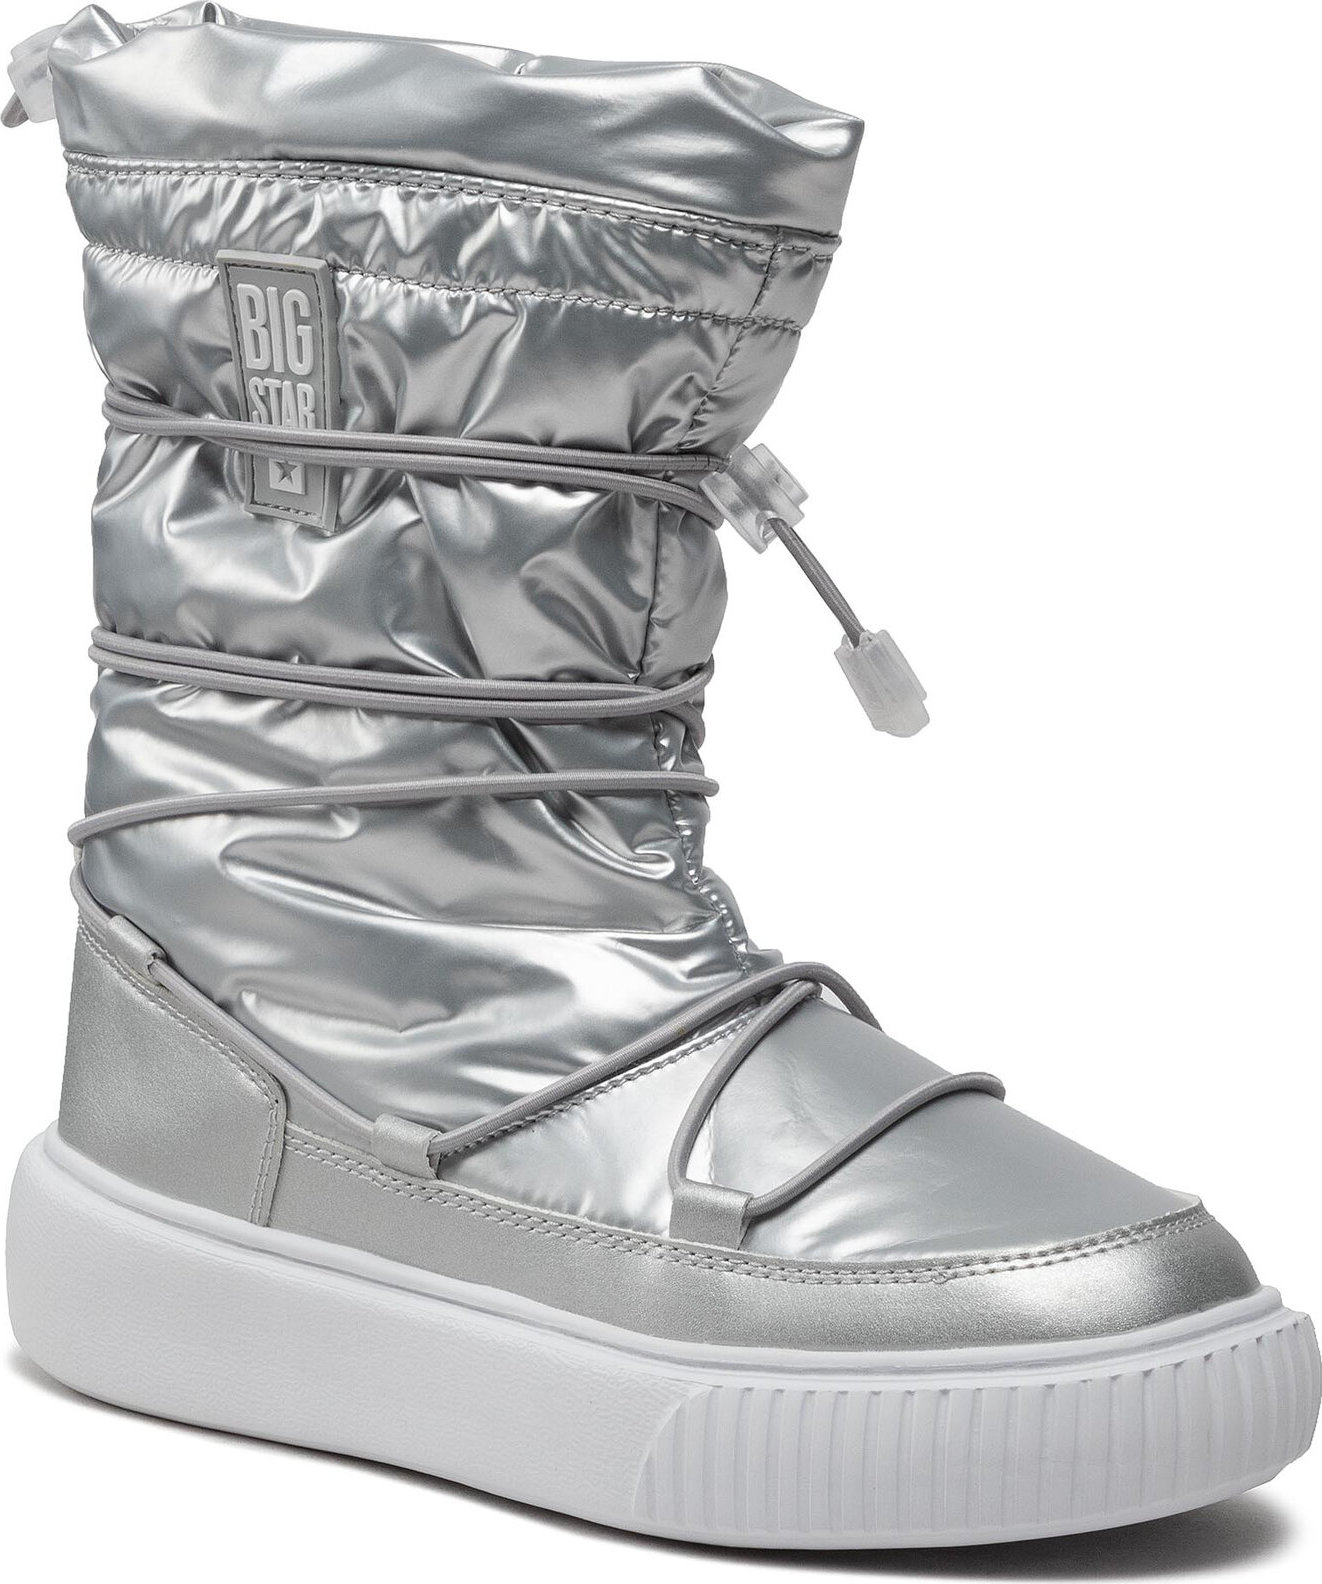 Snehule Big Star Shoes KK274195 904 Silver